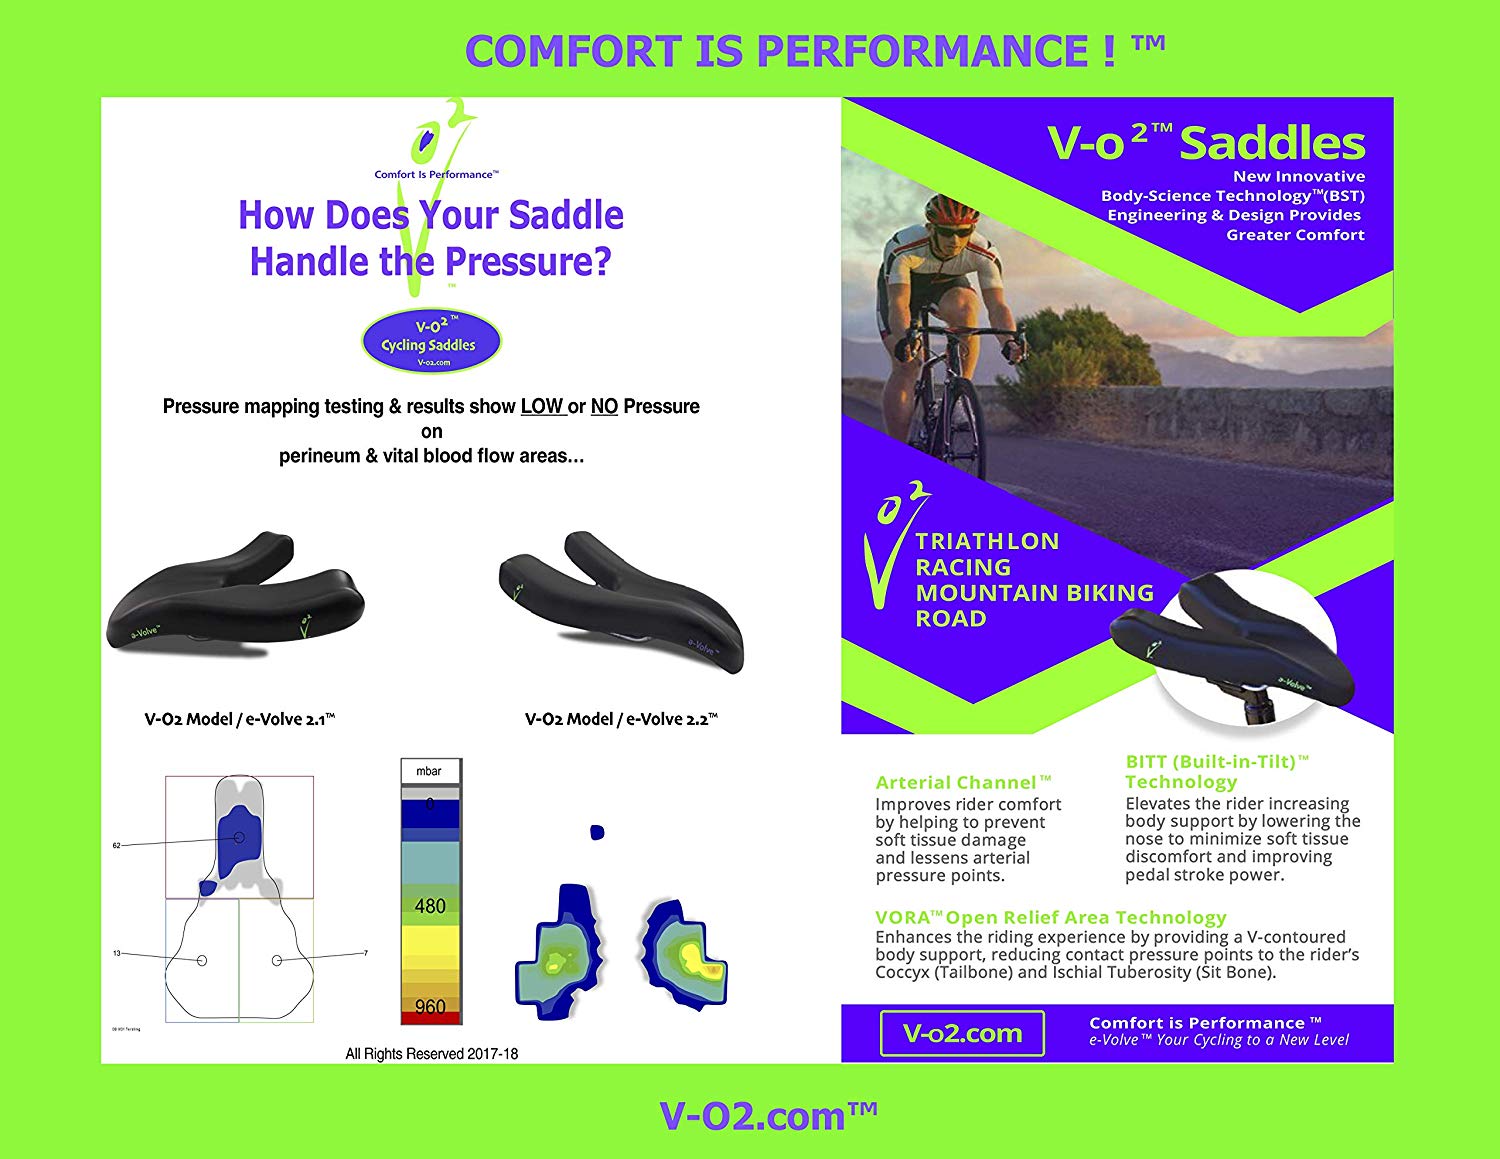 V-O2 Cycling Saddles e-Volve